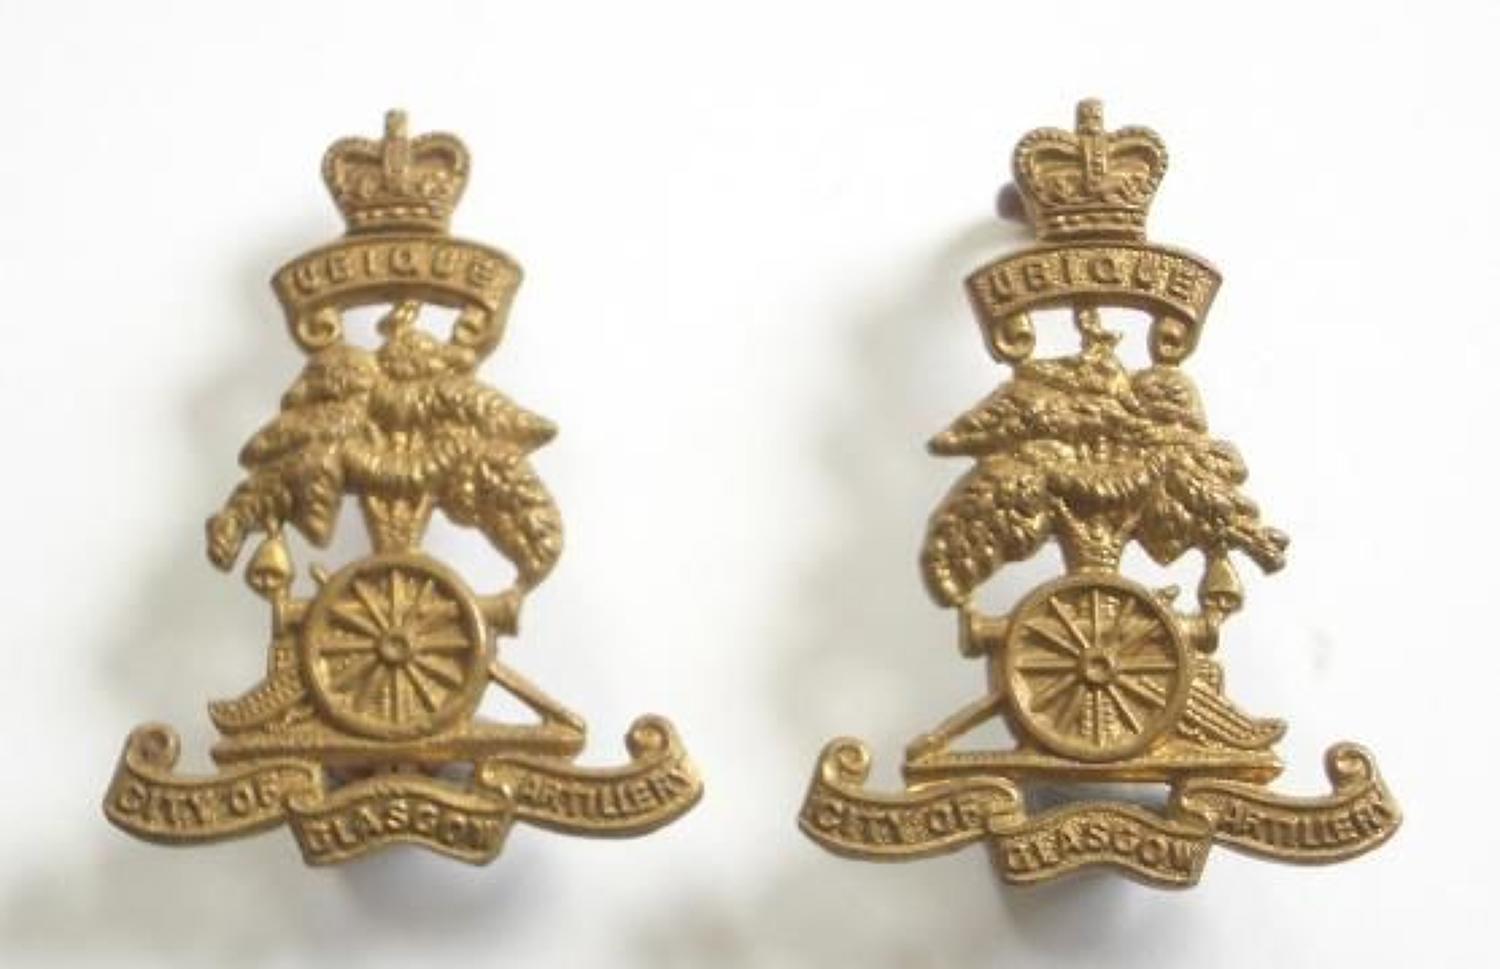 City of Glasgow Artillery OR’s pair of collar badges circa 1955-61.